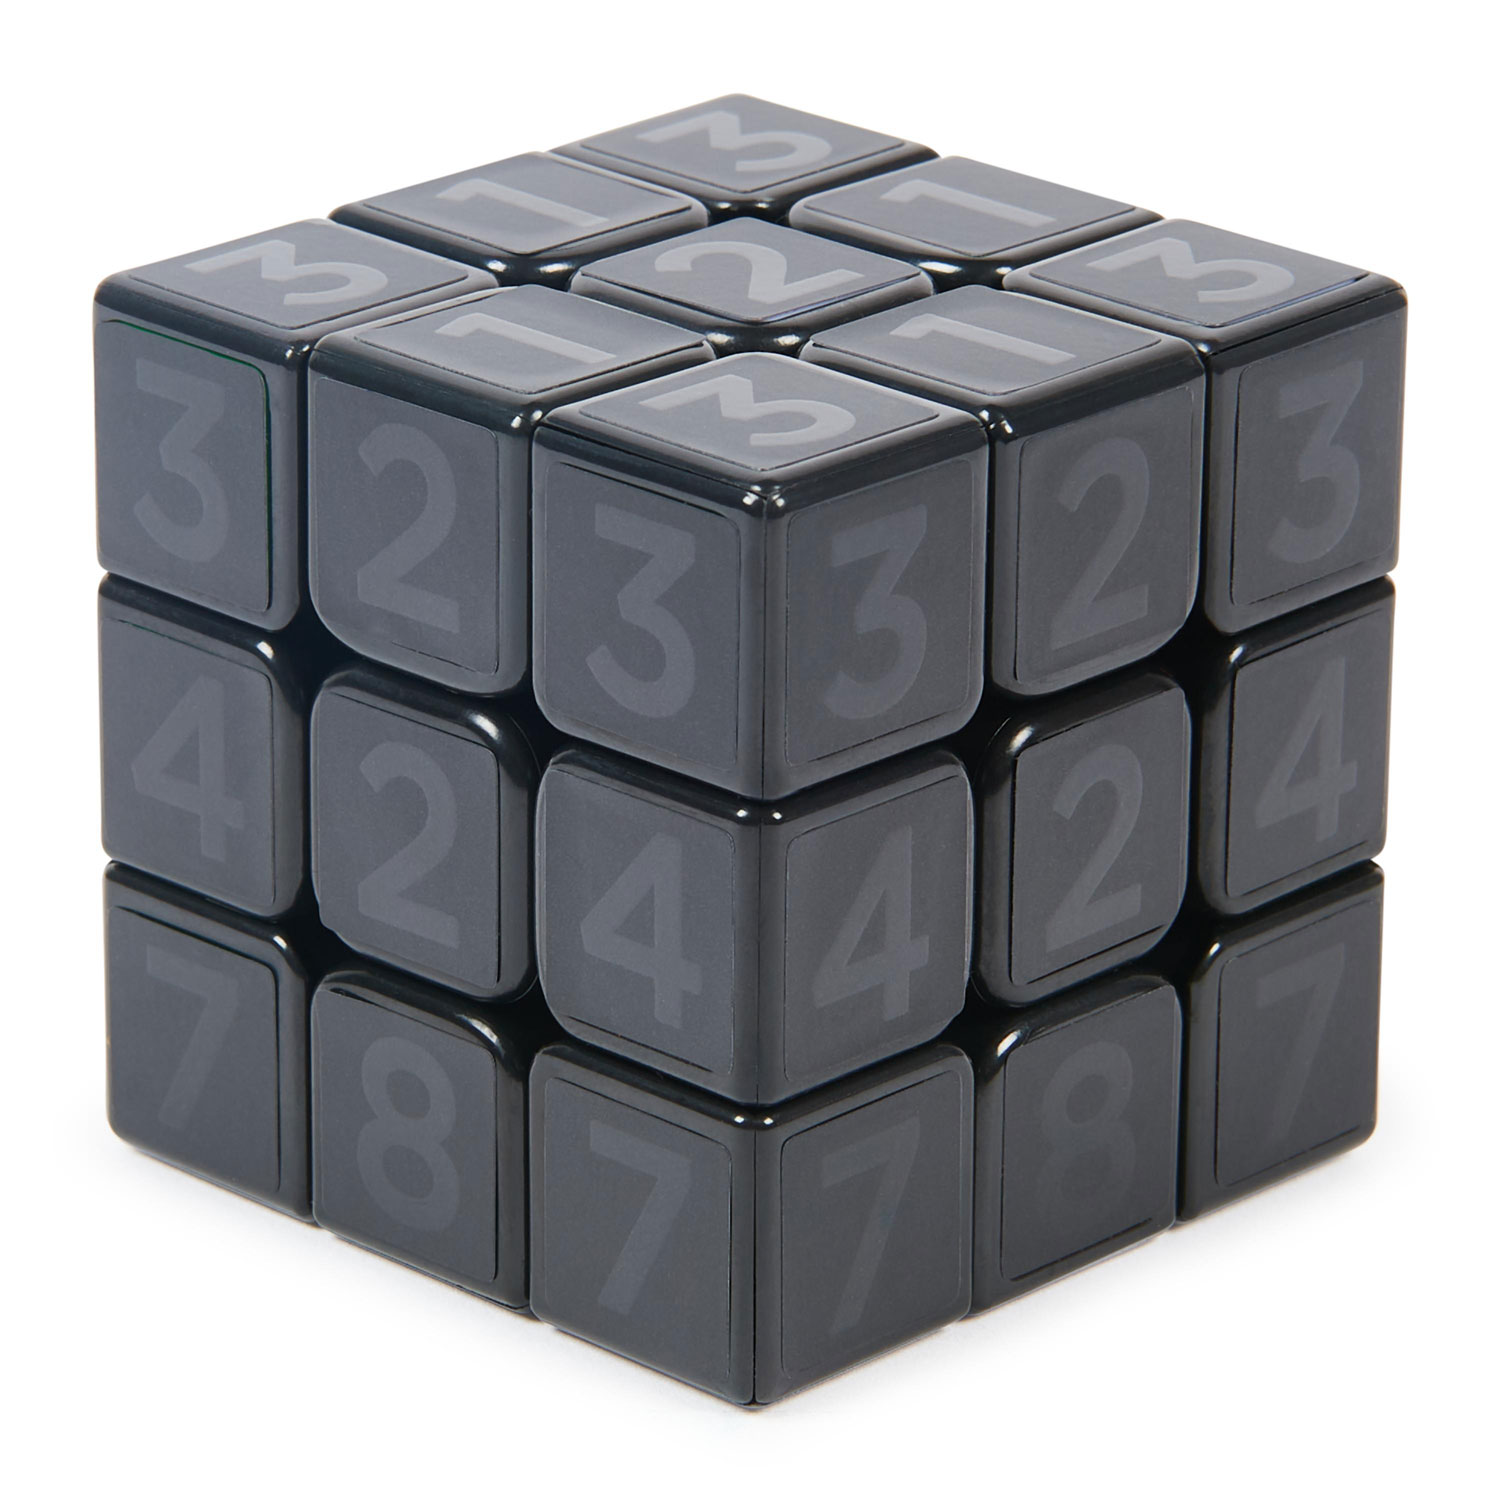 Rubik's Cube – Trainer